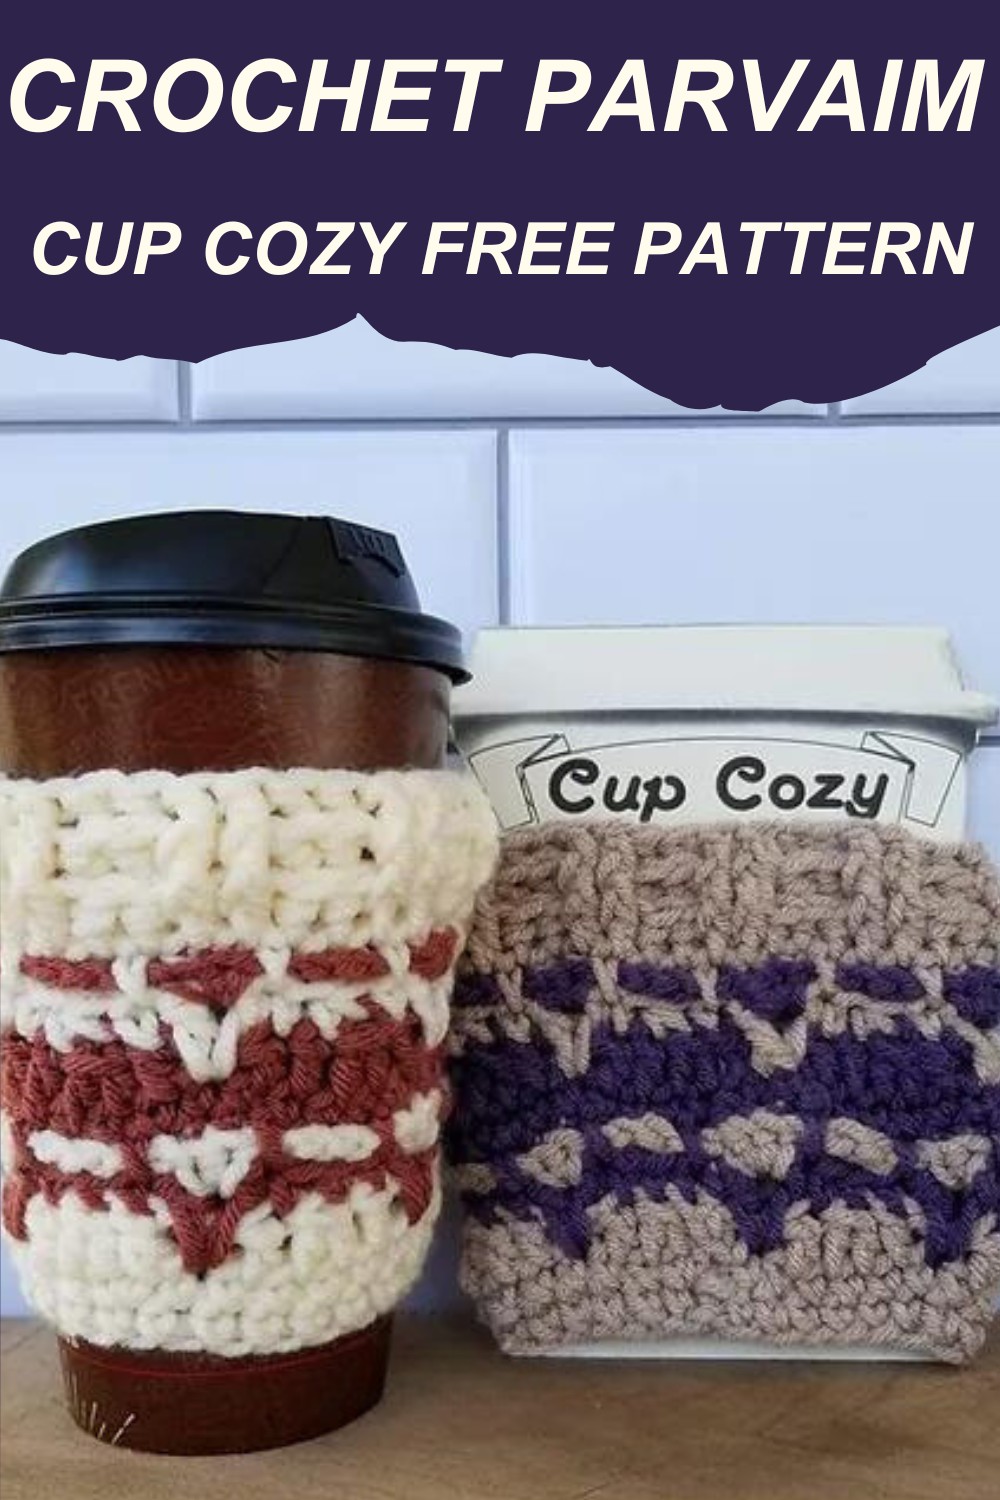 Crochet Parvaim Cup Cozy Free Pattern